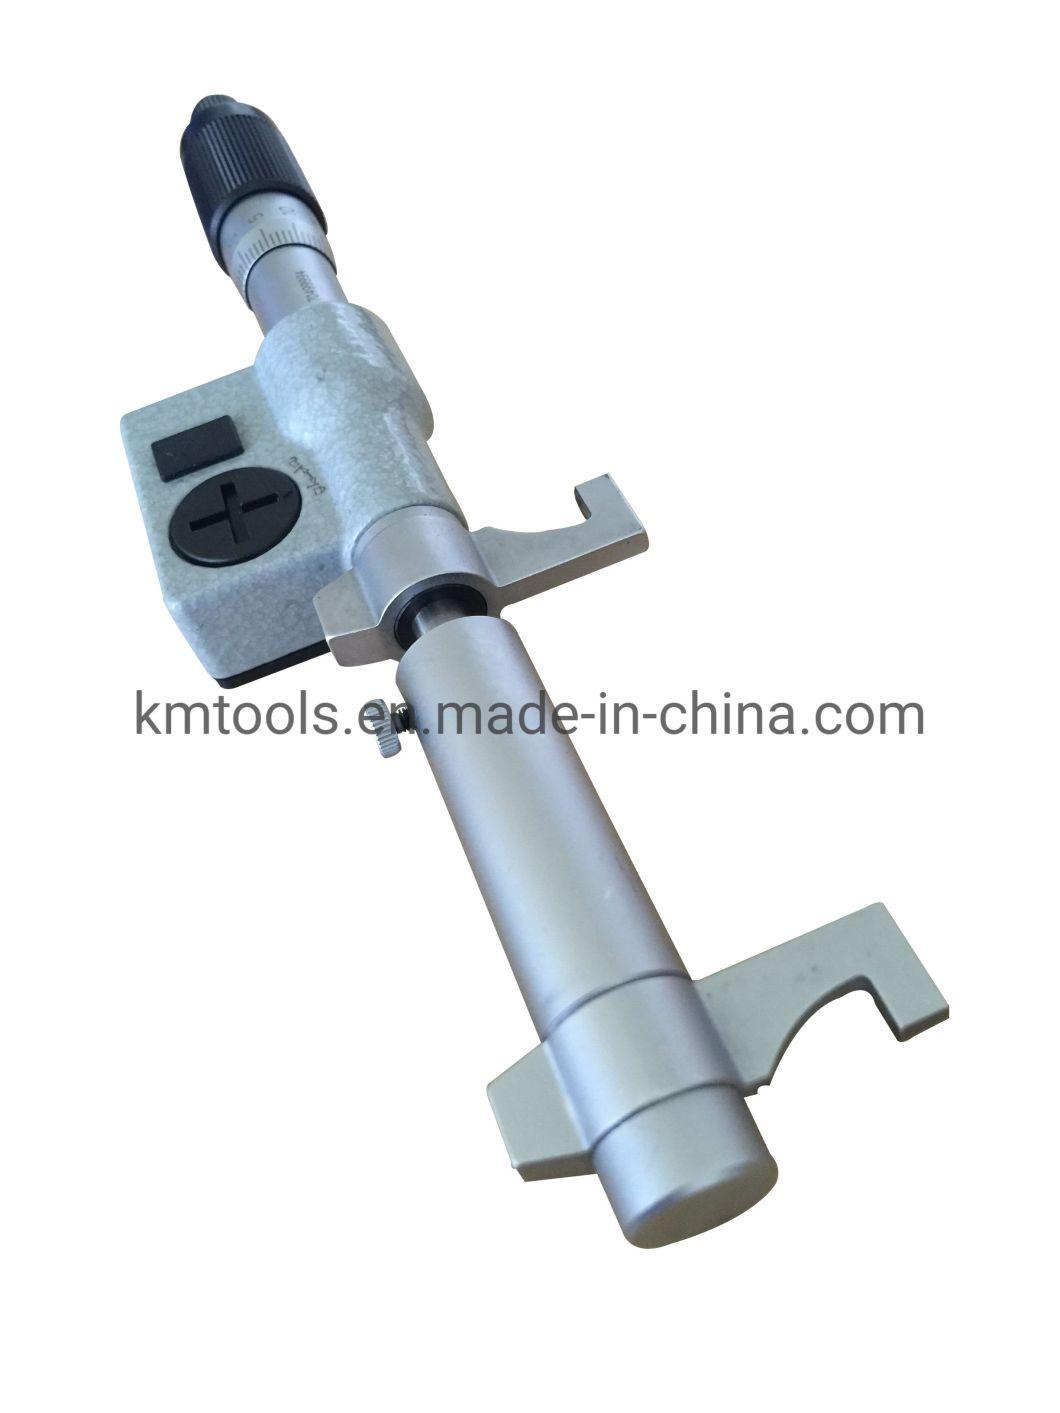 75-100mm Digital Inside Micrometer Professional Supplier